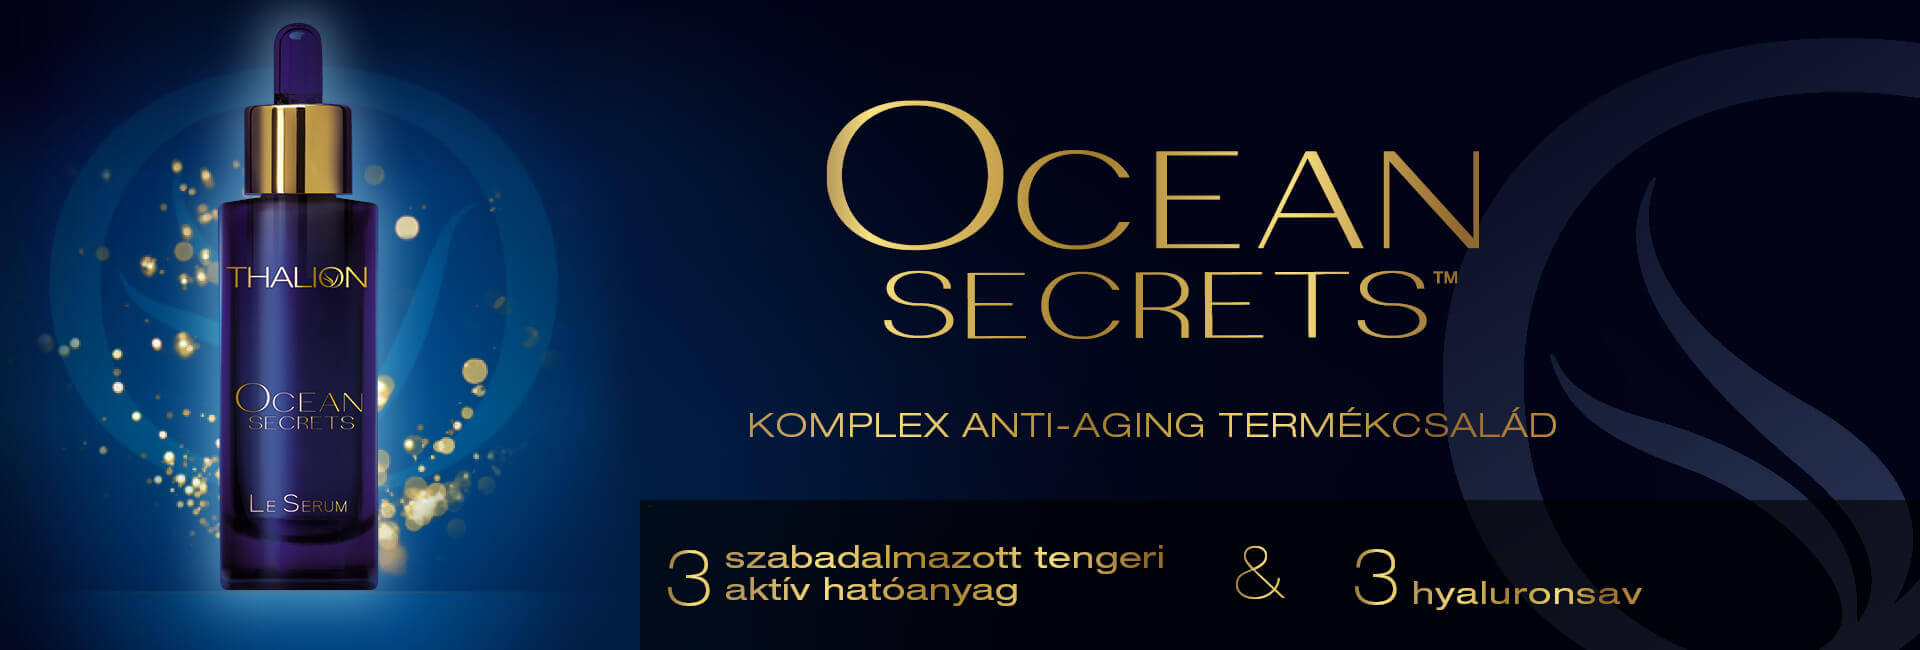 Ocean Secrets - Prémium anti-aging termékek